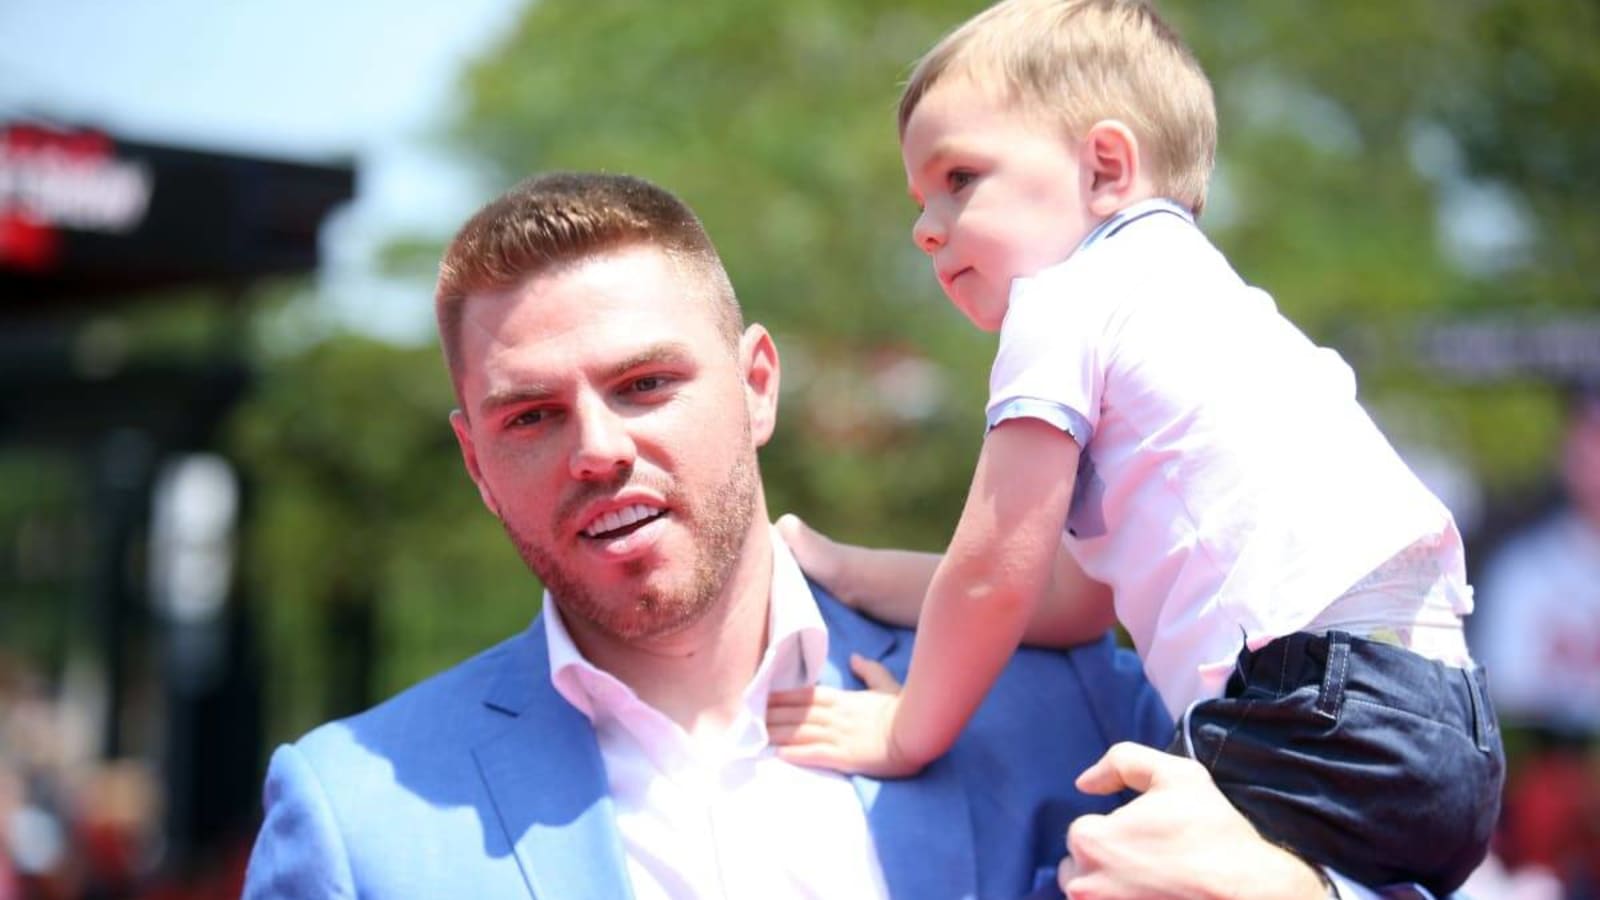 WATCH: Dodgers' All-Star Freddie Freeman's son shows off